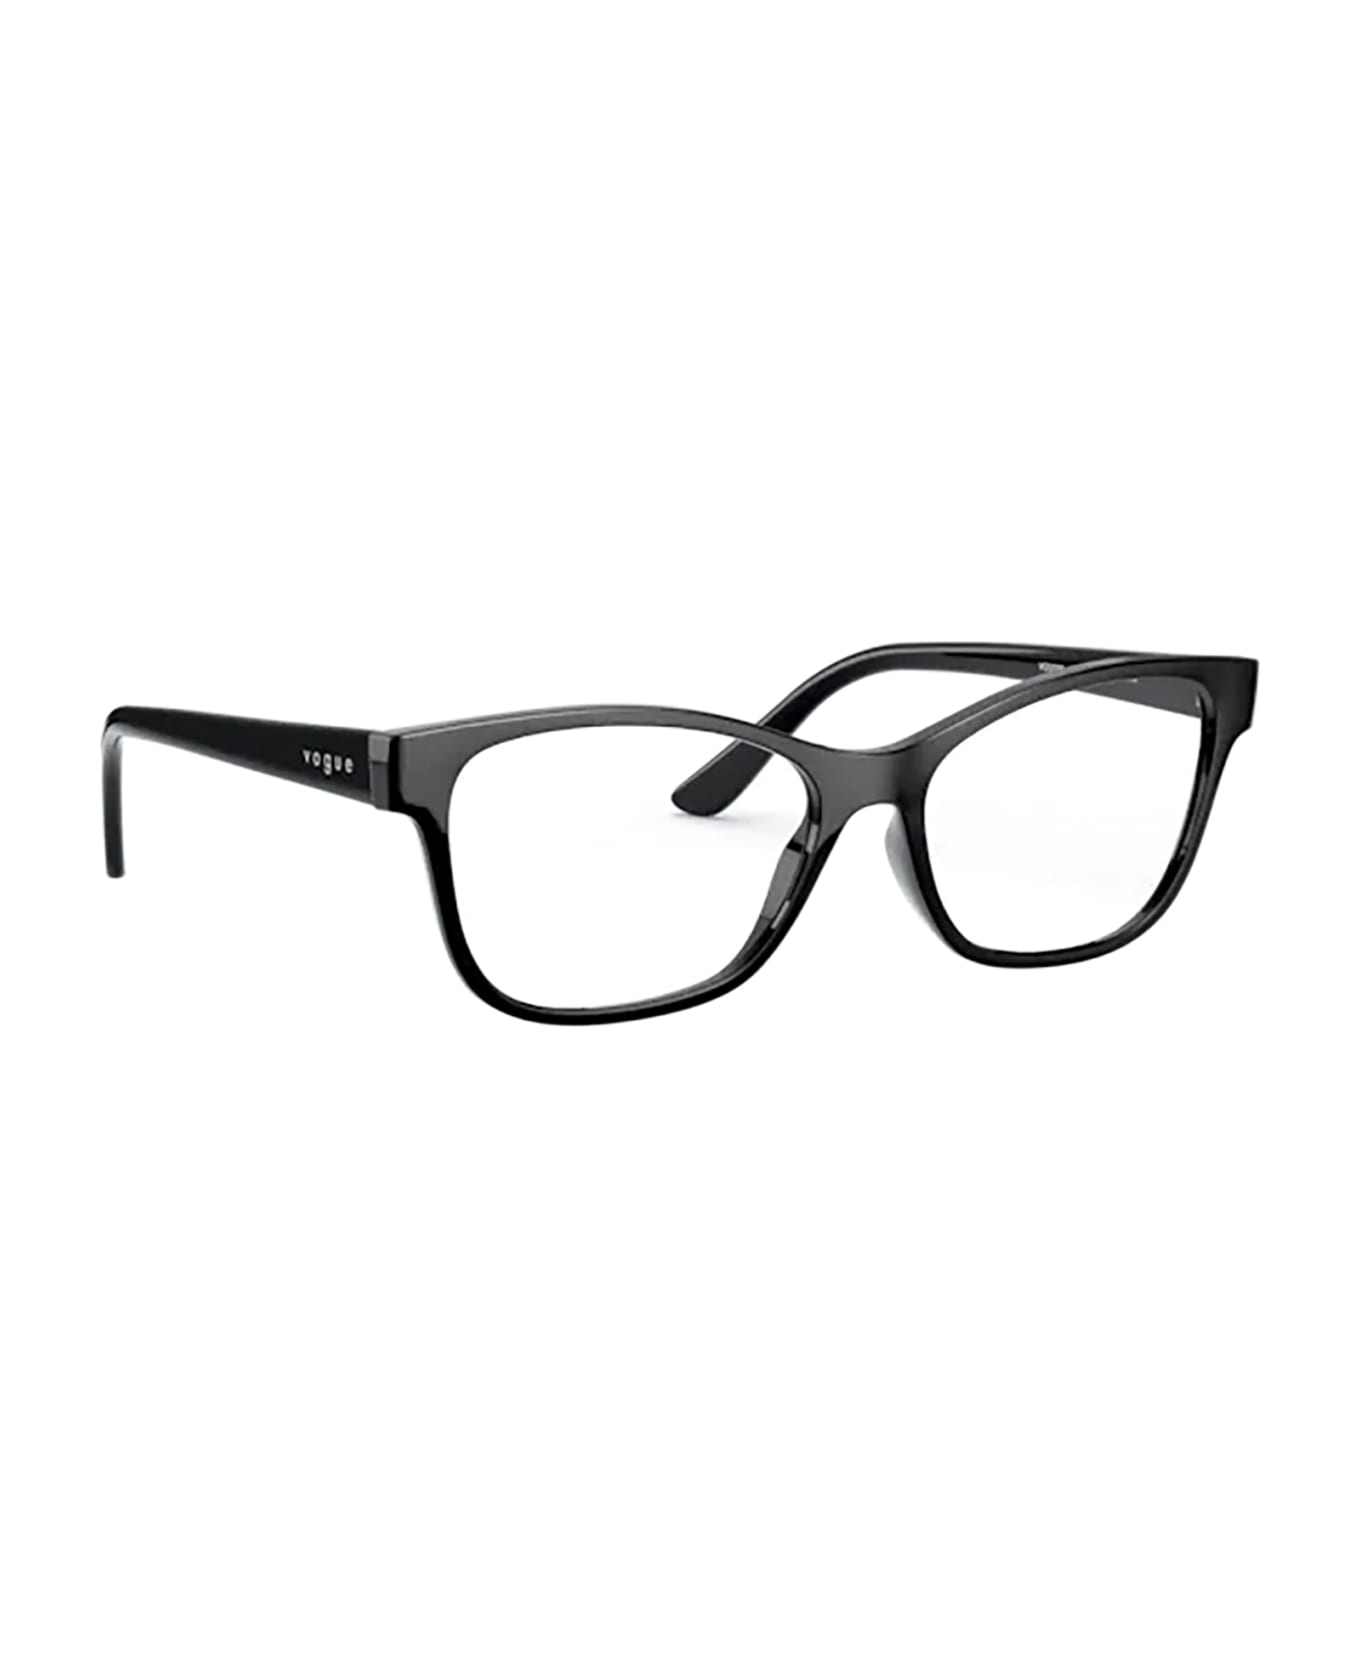 Vogue Eyewear Vo5335 Black Glasses - Black